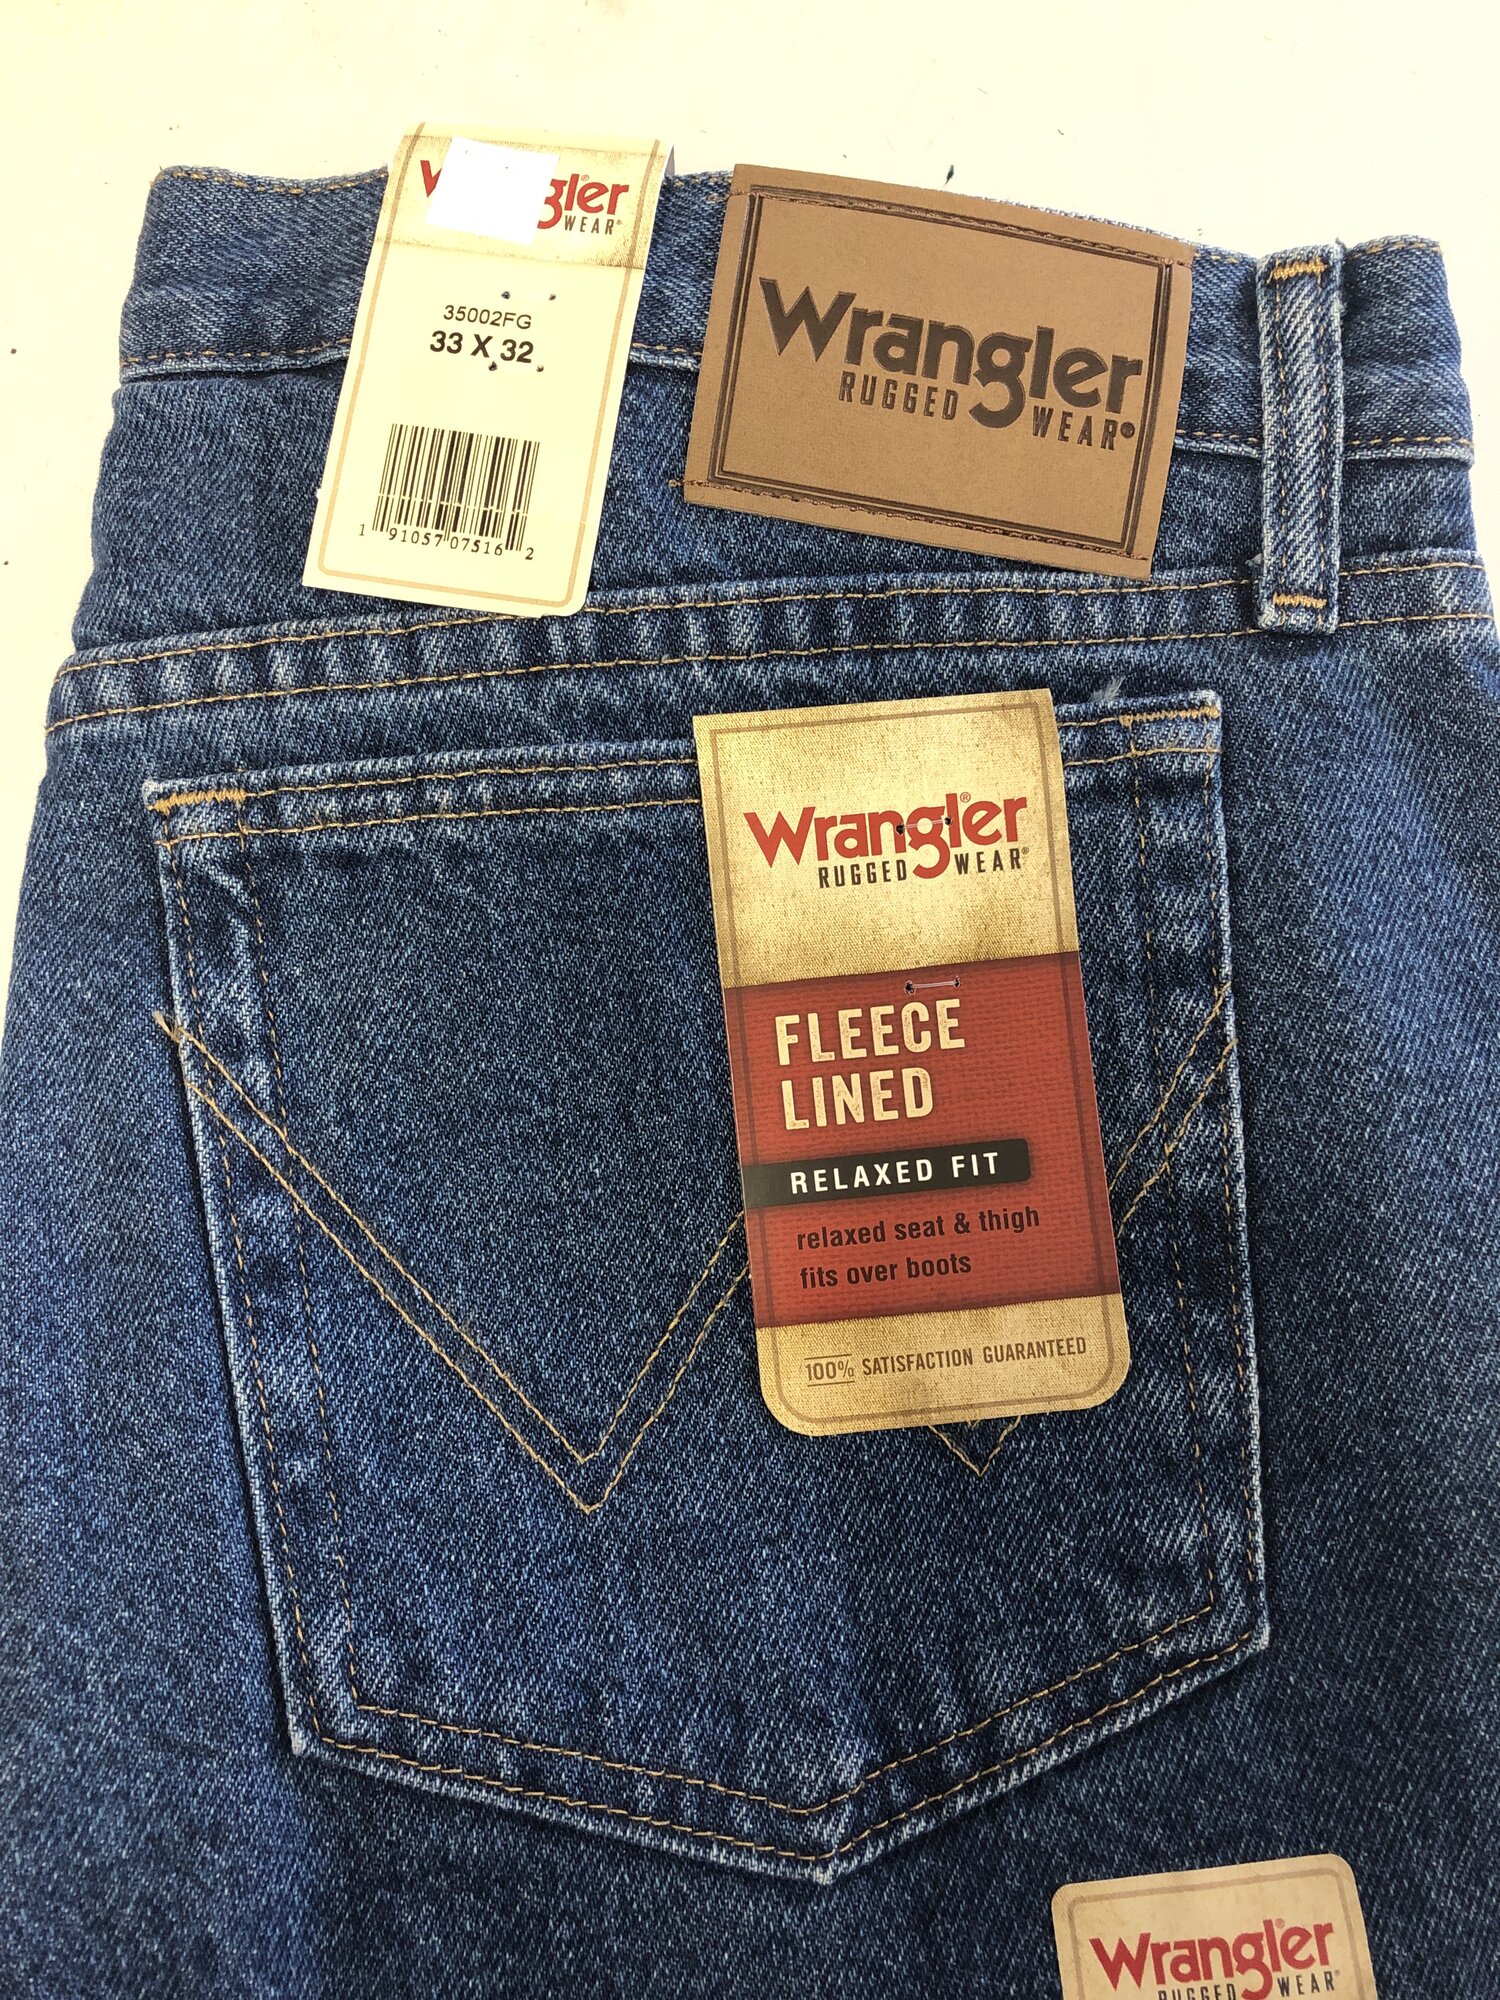 Sargent Blue Jeans - Fleece lined jeans